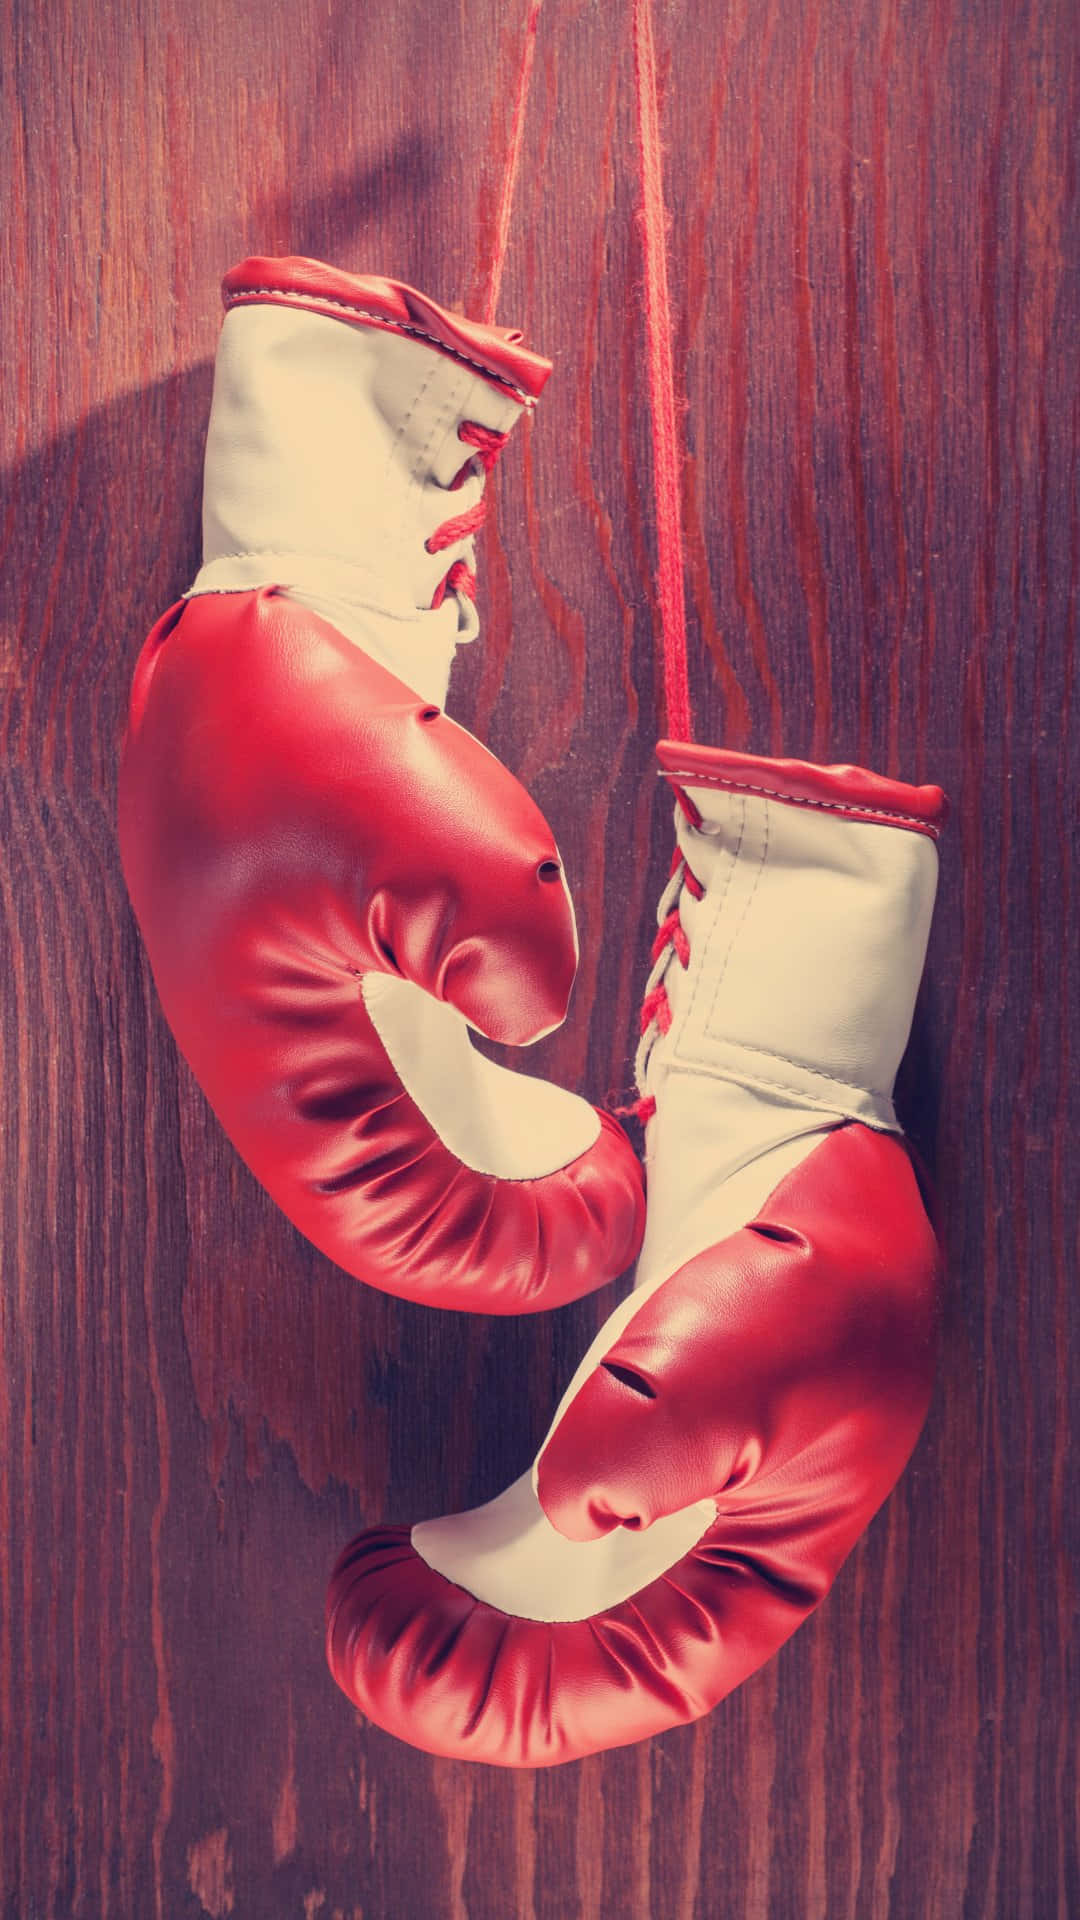 Vintage Red Boxing Gloves Wooden Background Wallpaper